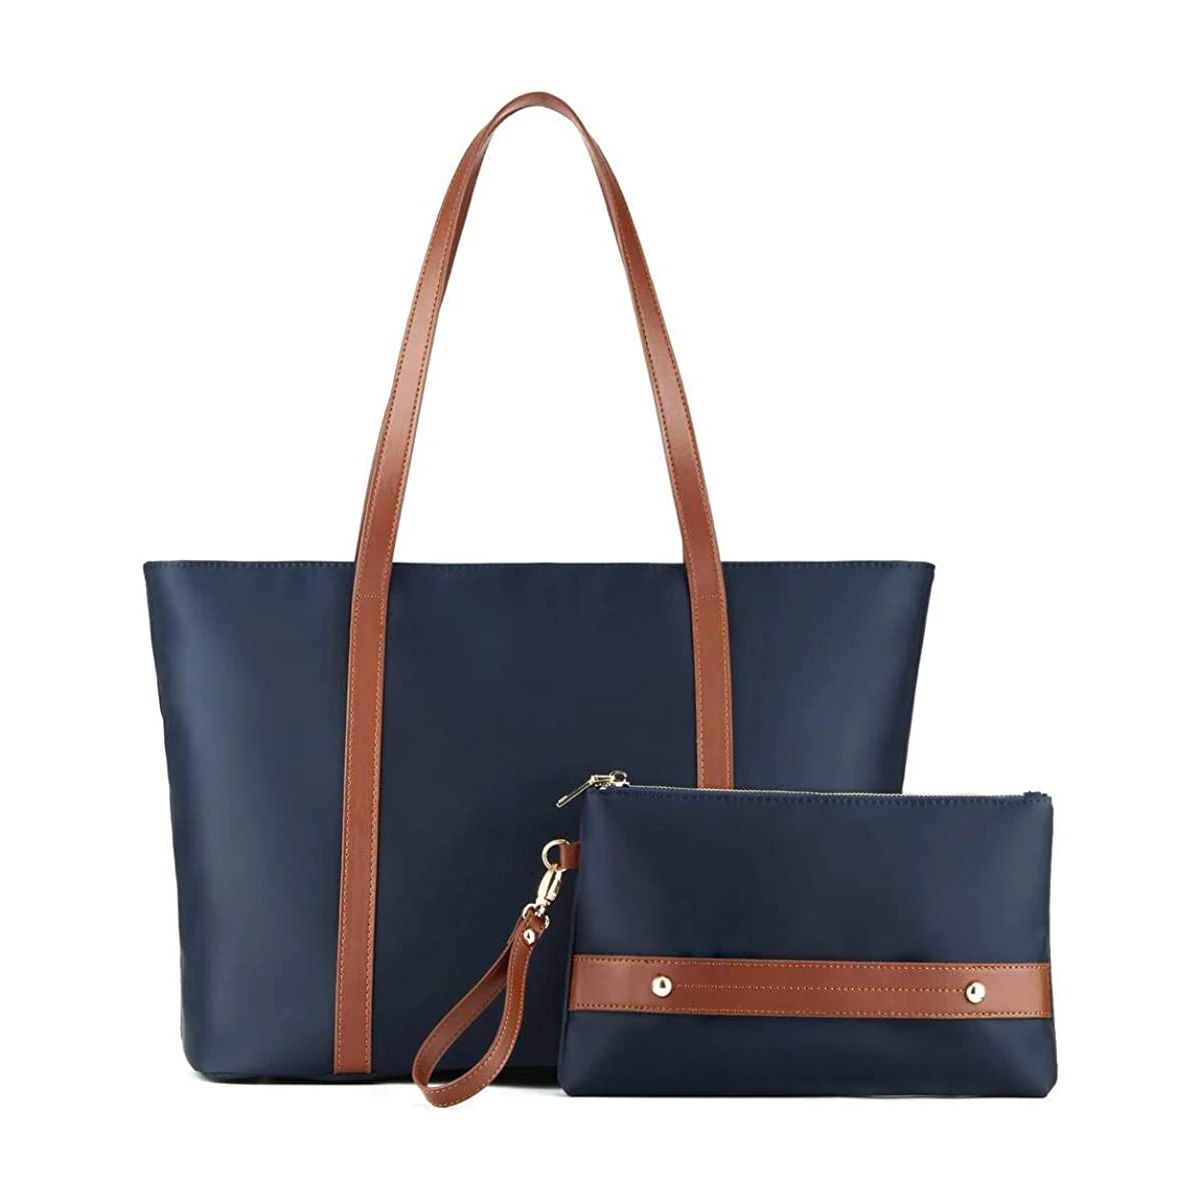 Women’s Tote Bag Shopping Tote Bag Nylon Water Resistant Handbag Set with Wristlet Navy Blue